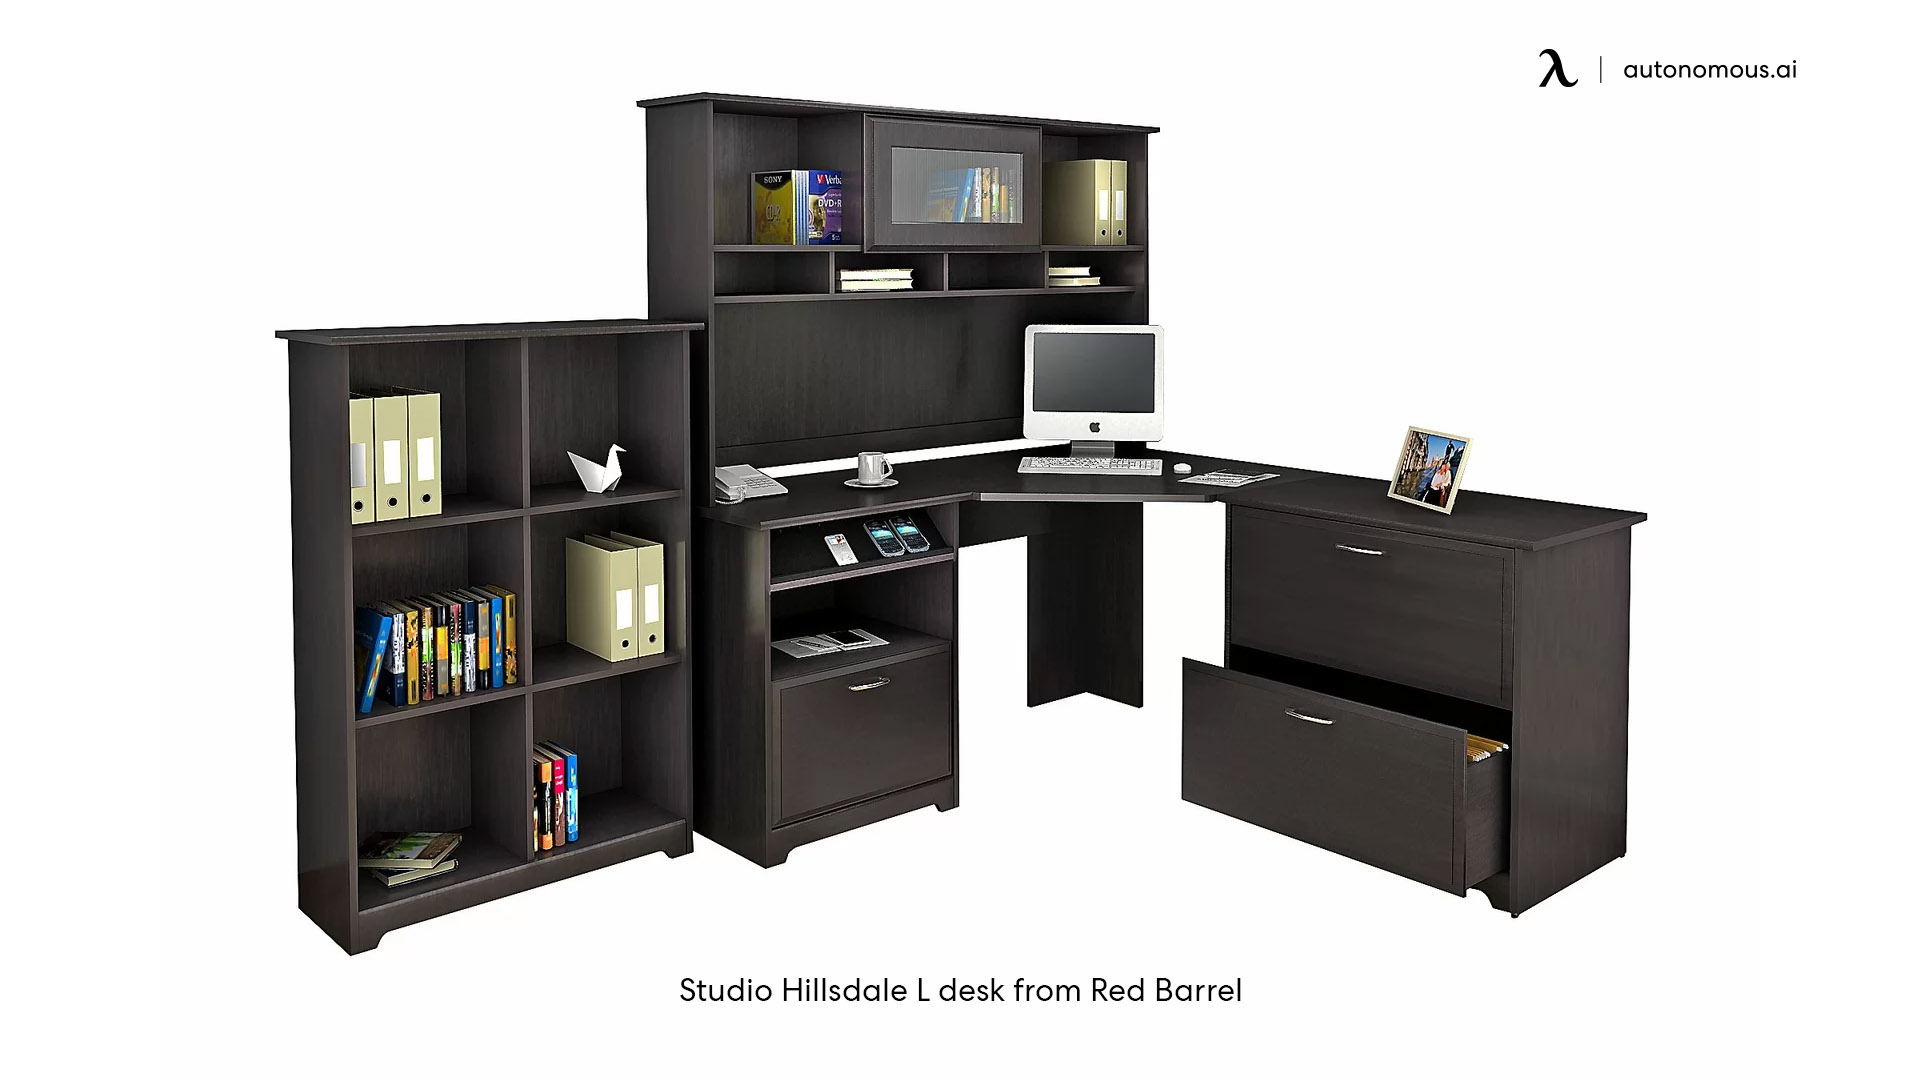 Hillsdale l shaped office desk by Red Barrel Studio